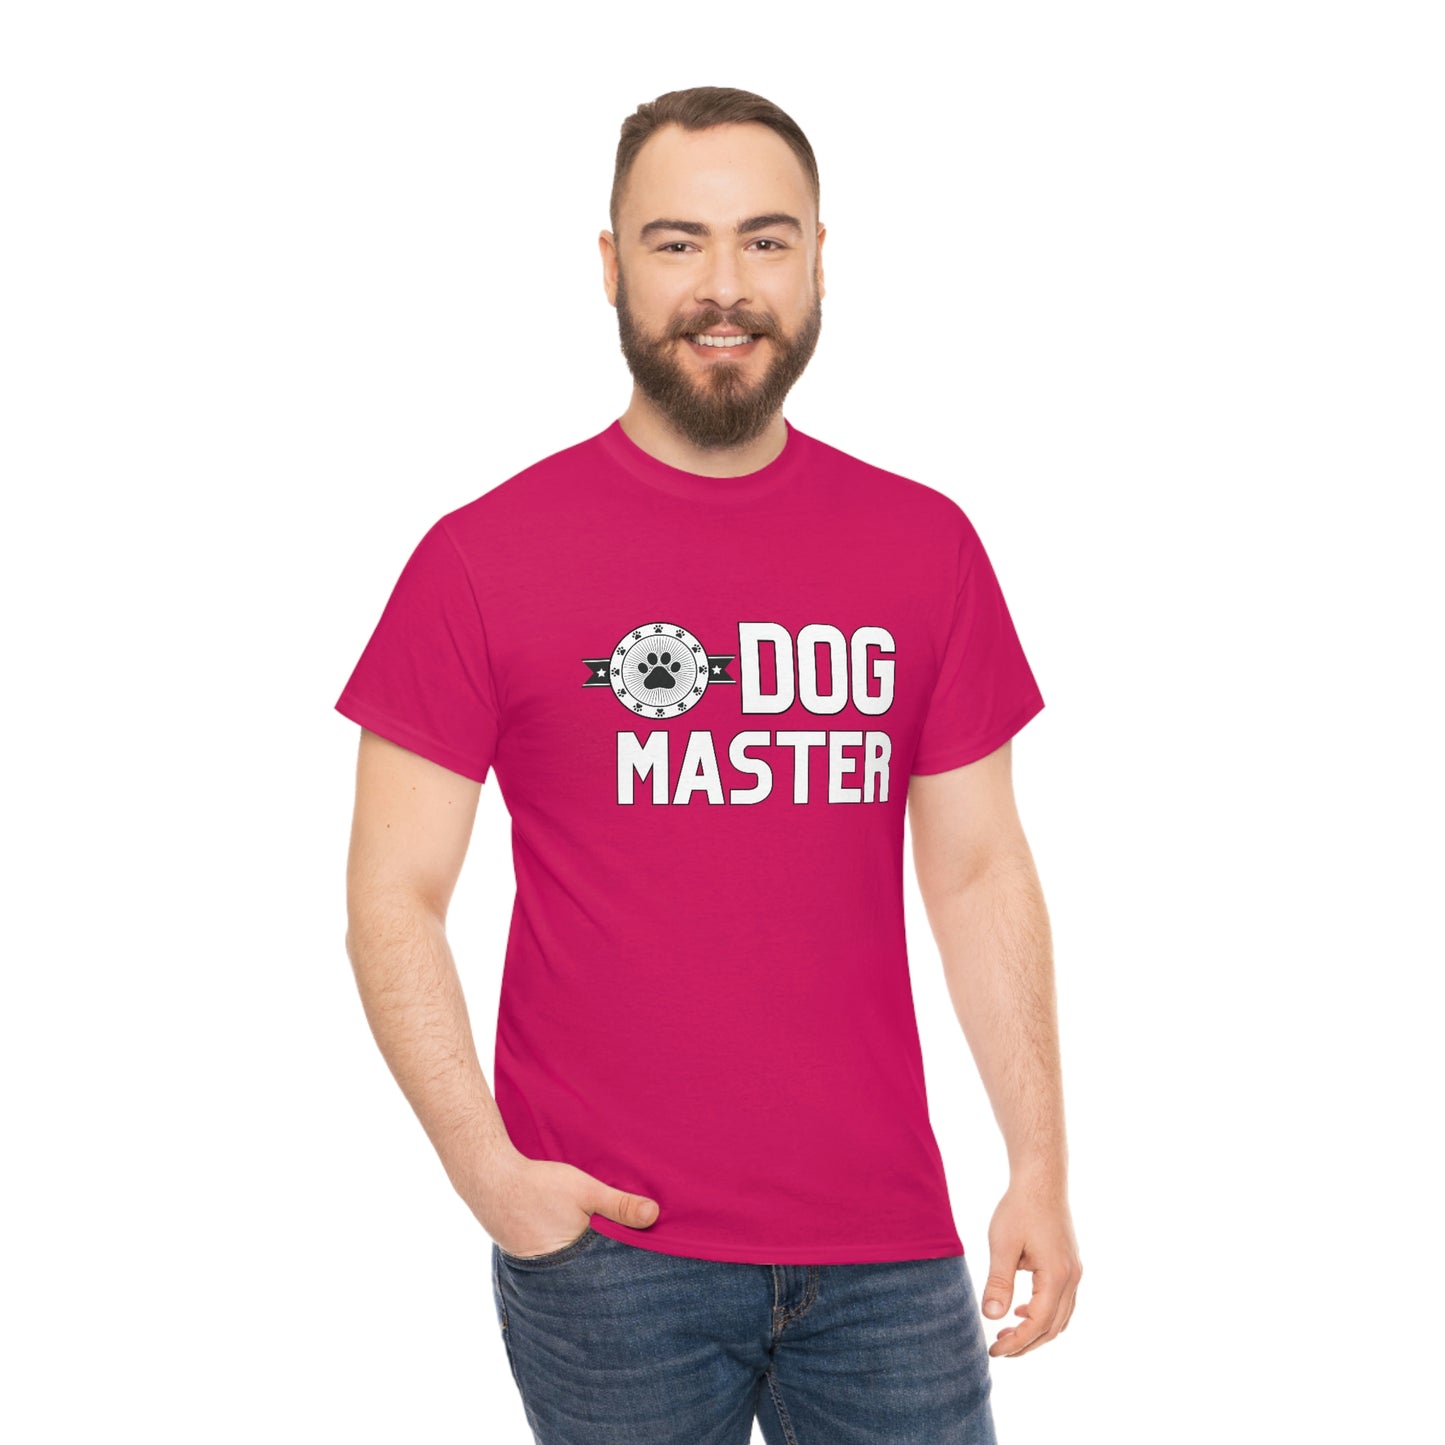 Dog Master with Paws logo/Stars design Graphic tee shirt